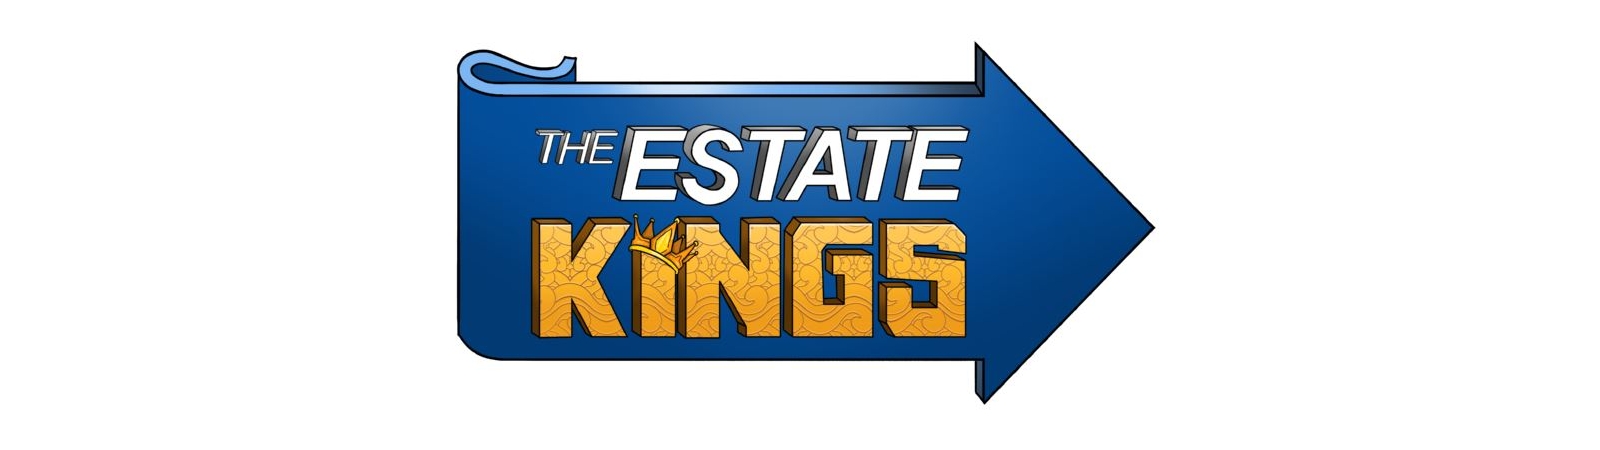 The Estate Kings | AuctionNinja